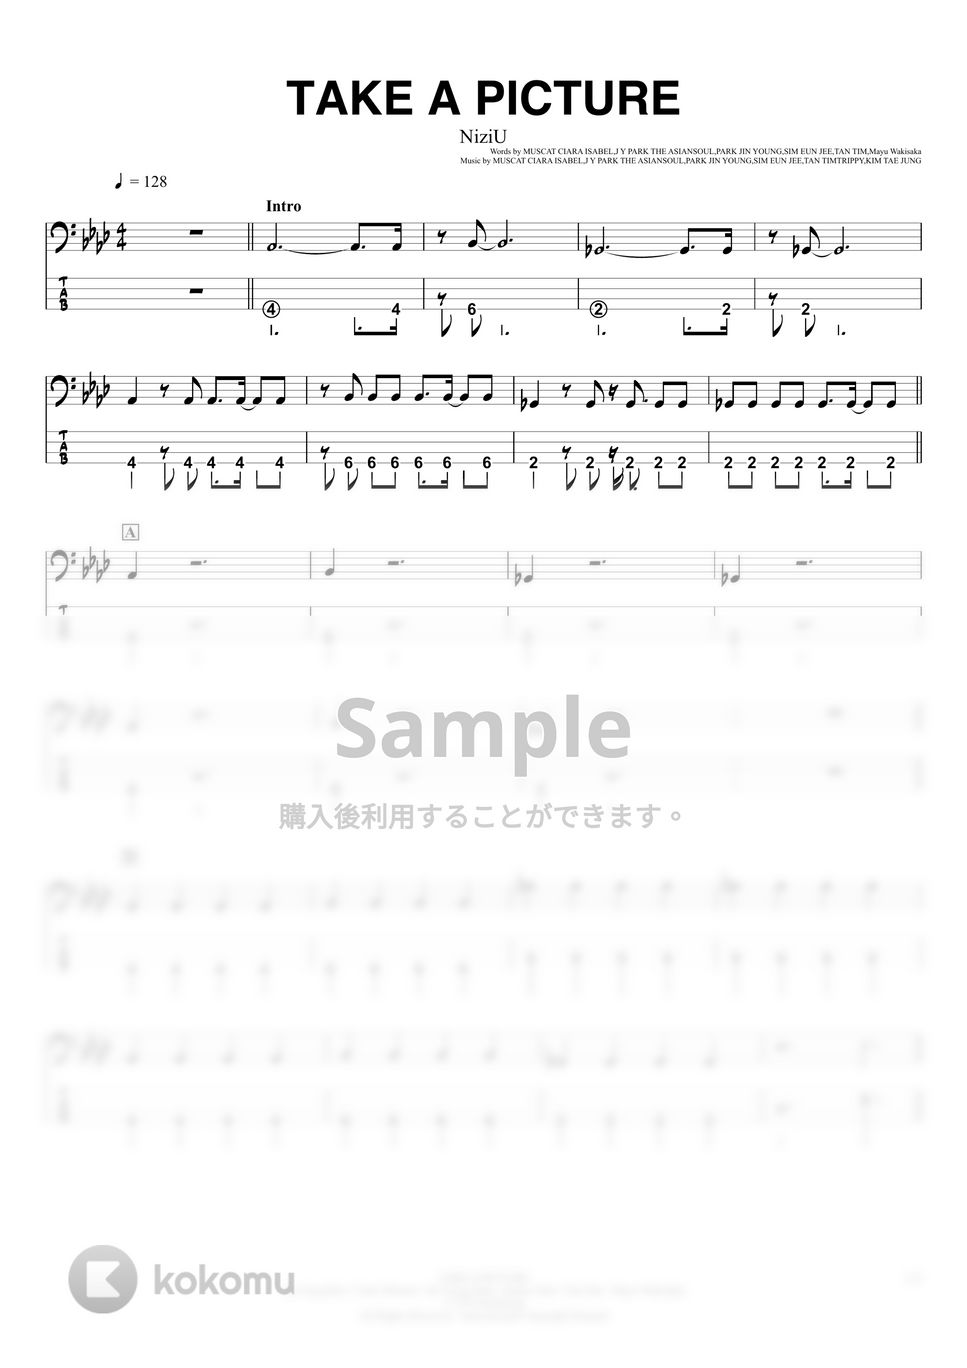 NiziU - Take a picture (ベースTAB譜☆4弦ベース対応) by swbass